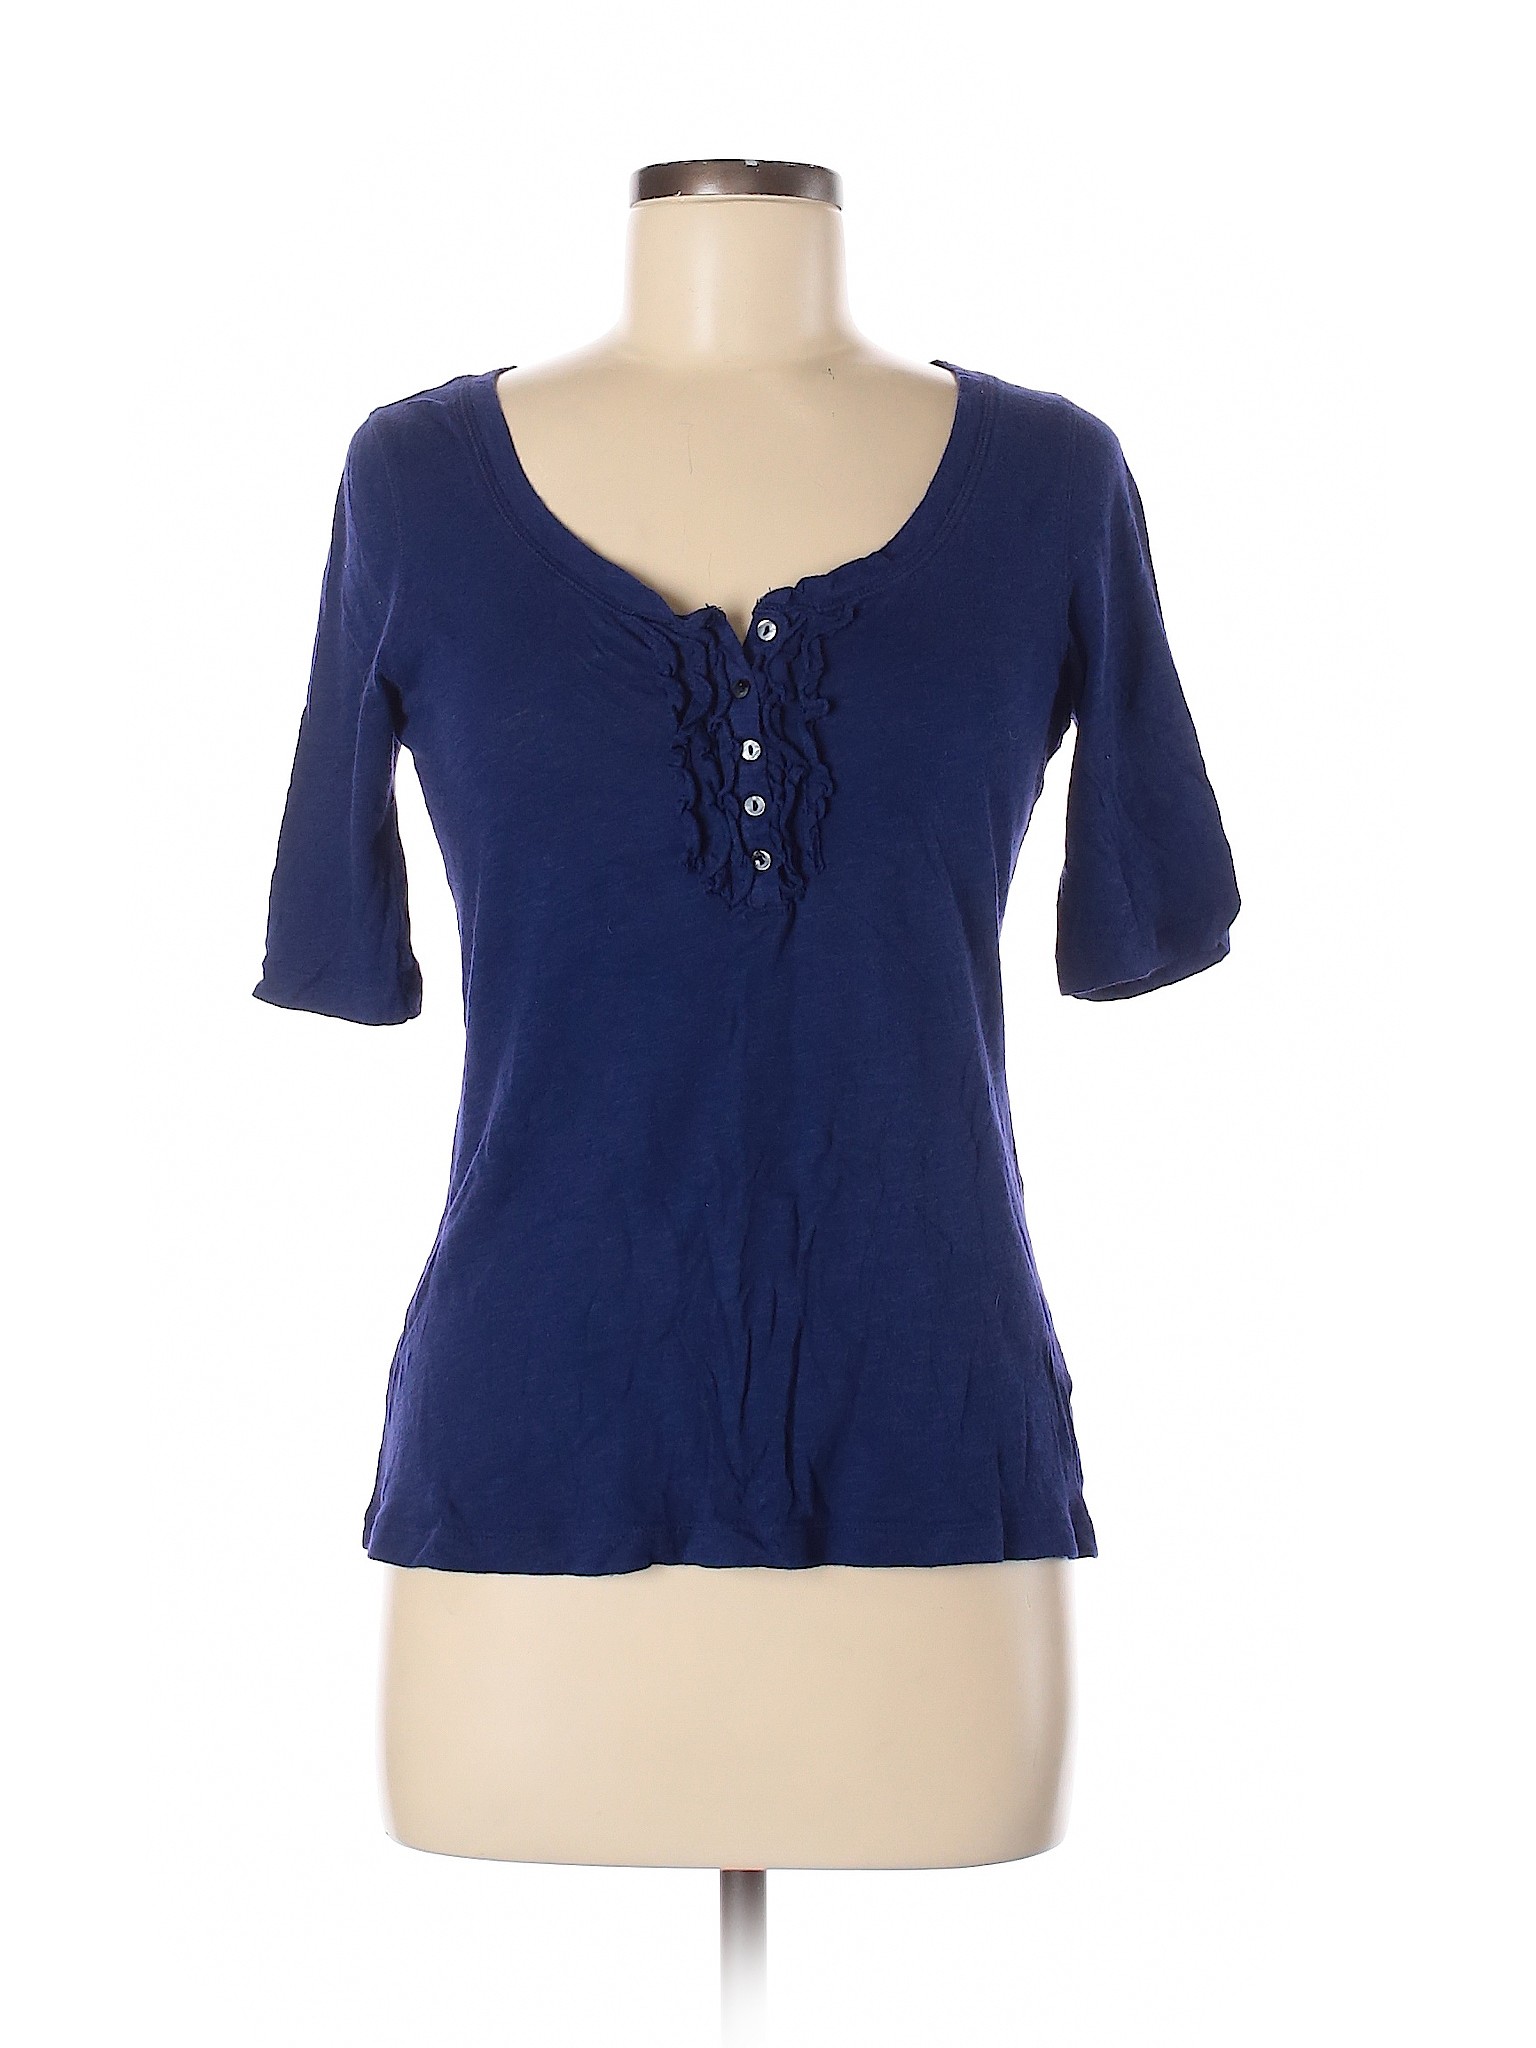 Old Navy Women Blue Short Sleeve Top M | eBay